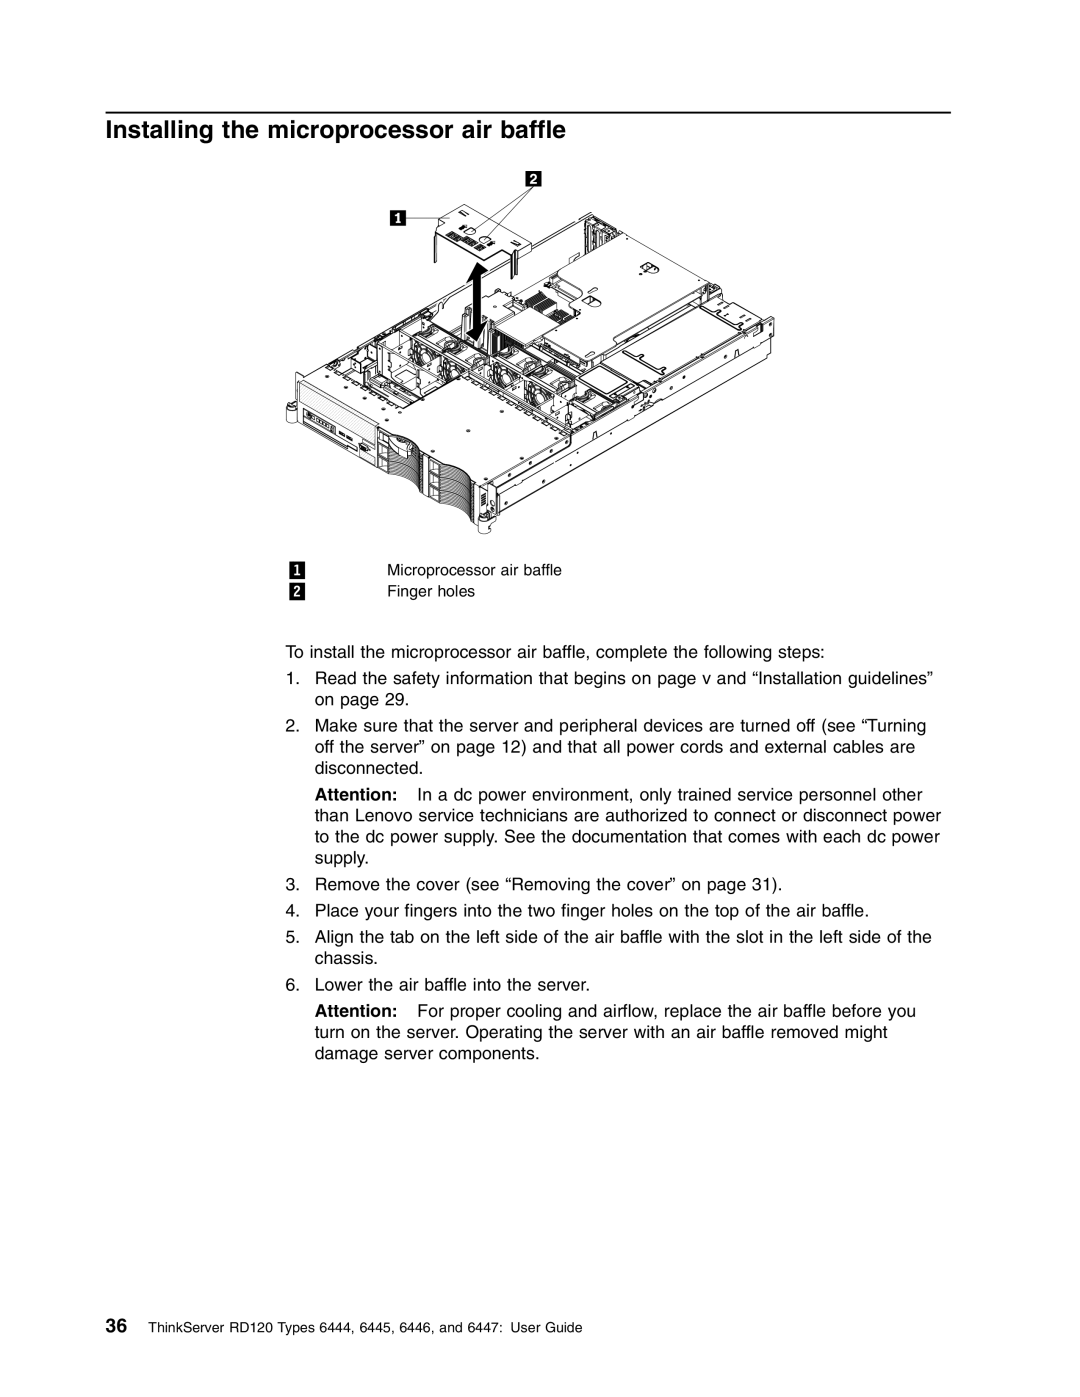 Lenovo RD120 manual Installing the microprocessor air baffle 